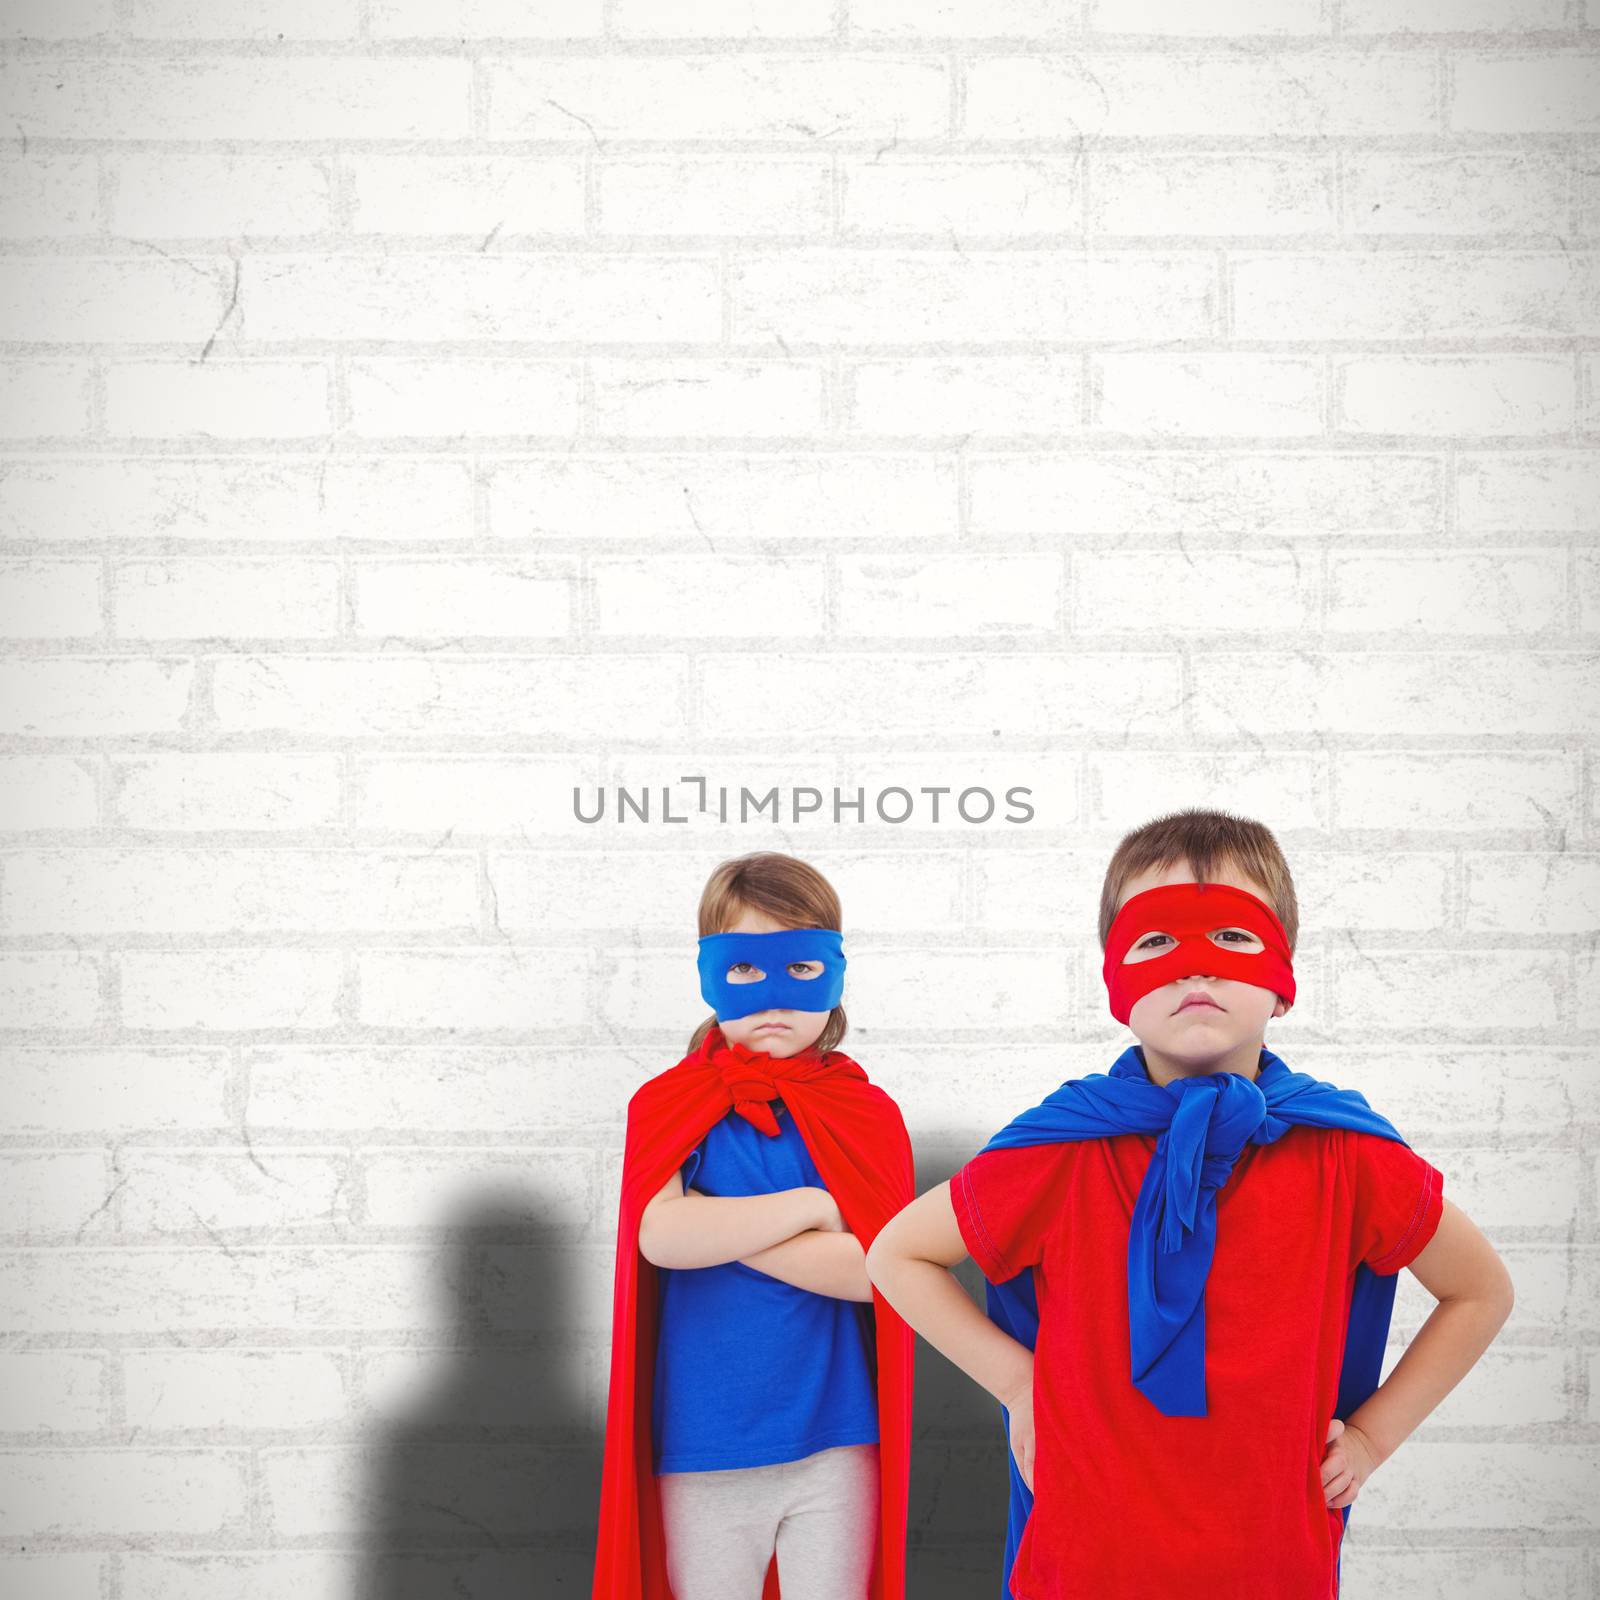 Composite image of masked kids pretending to be superheroes by Wavebreakmedia